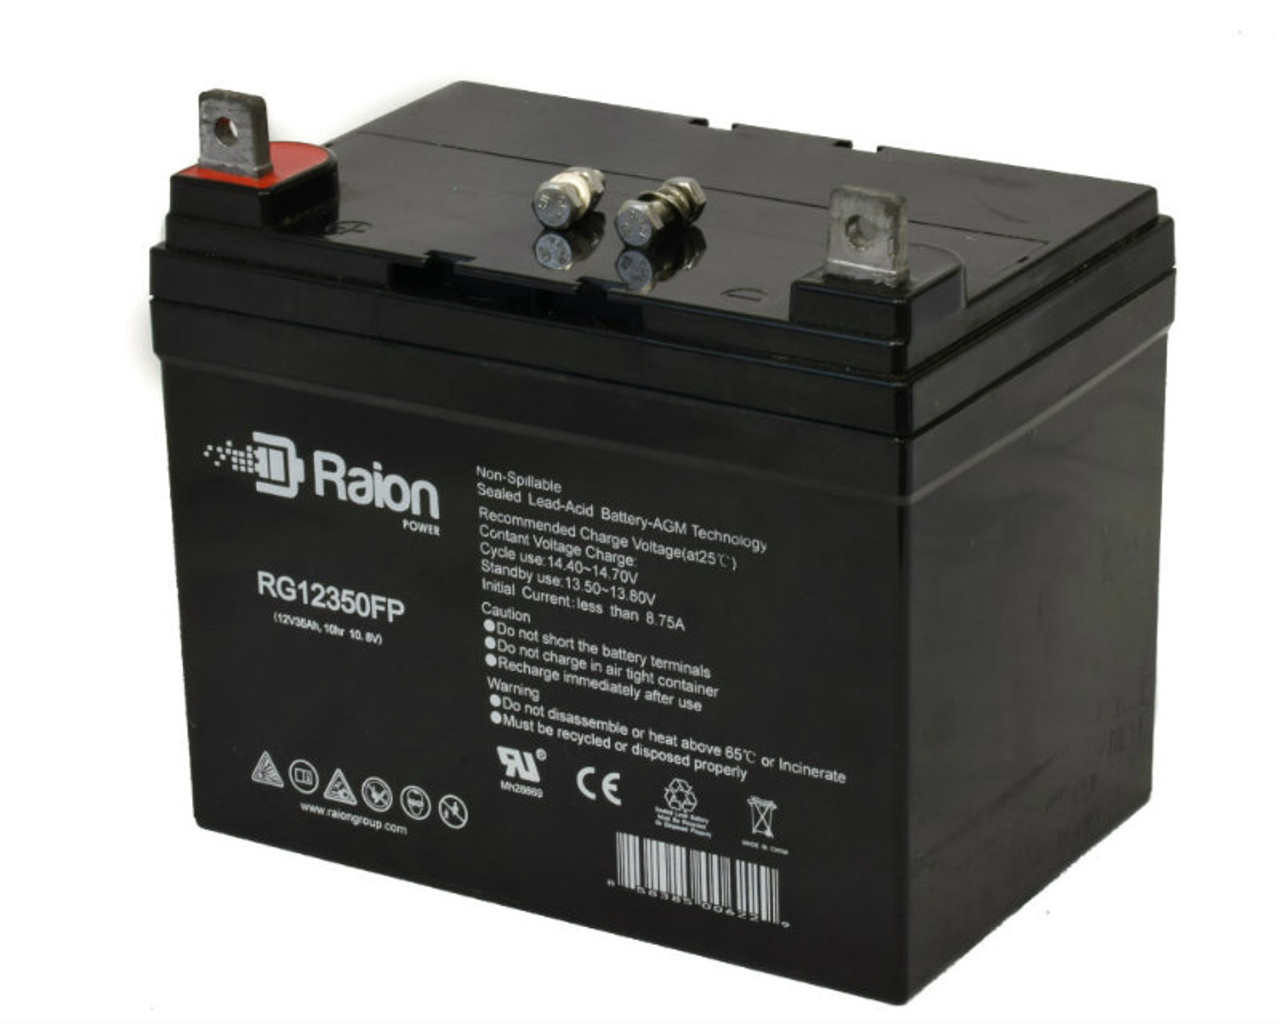 Raion Power Replacement 12V 35Ah RG12350FP Battery for Simplicity REGENT 16H GARDEN